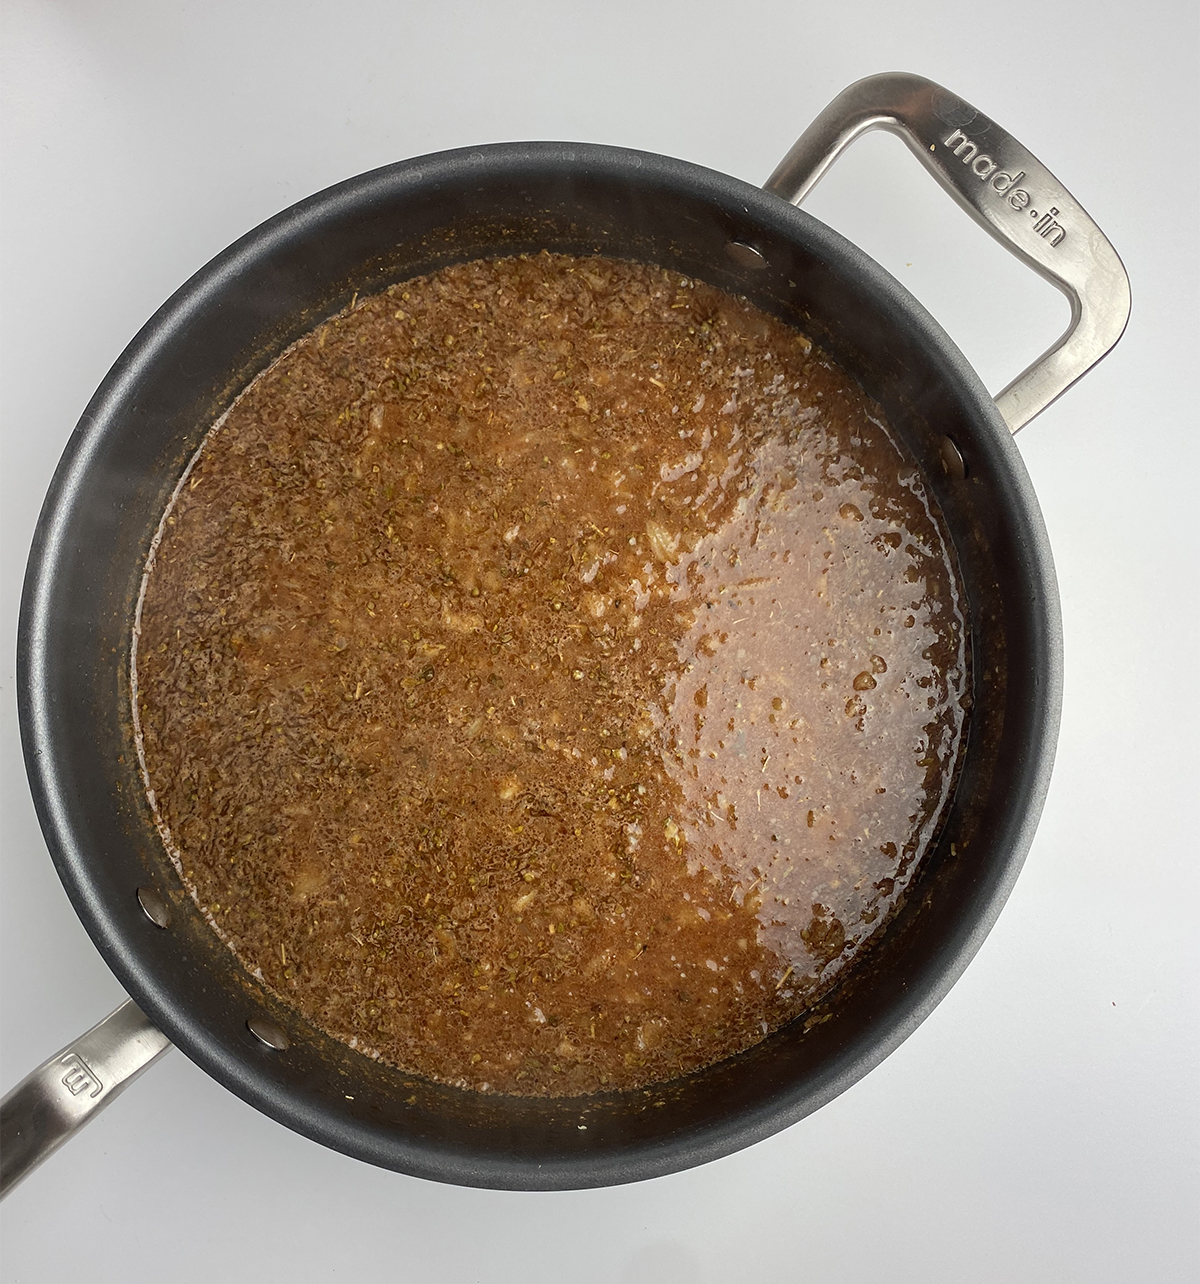 Cinnamon chili sauce in a pan.